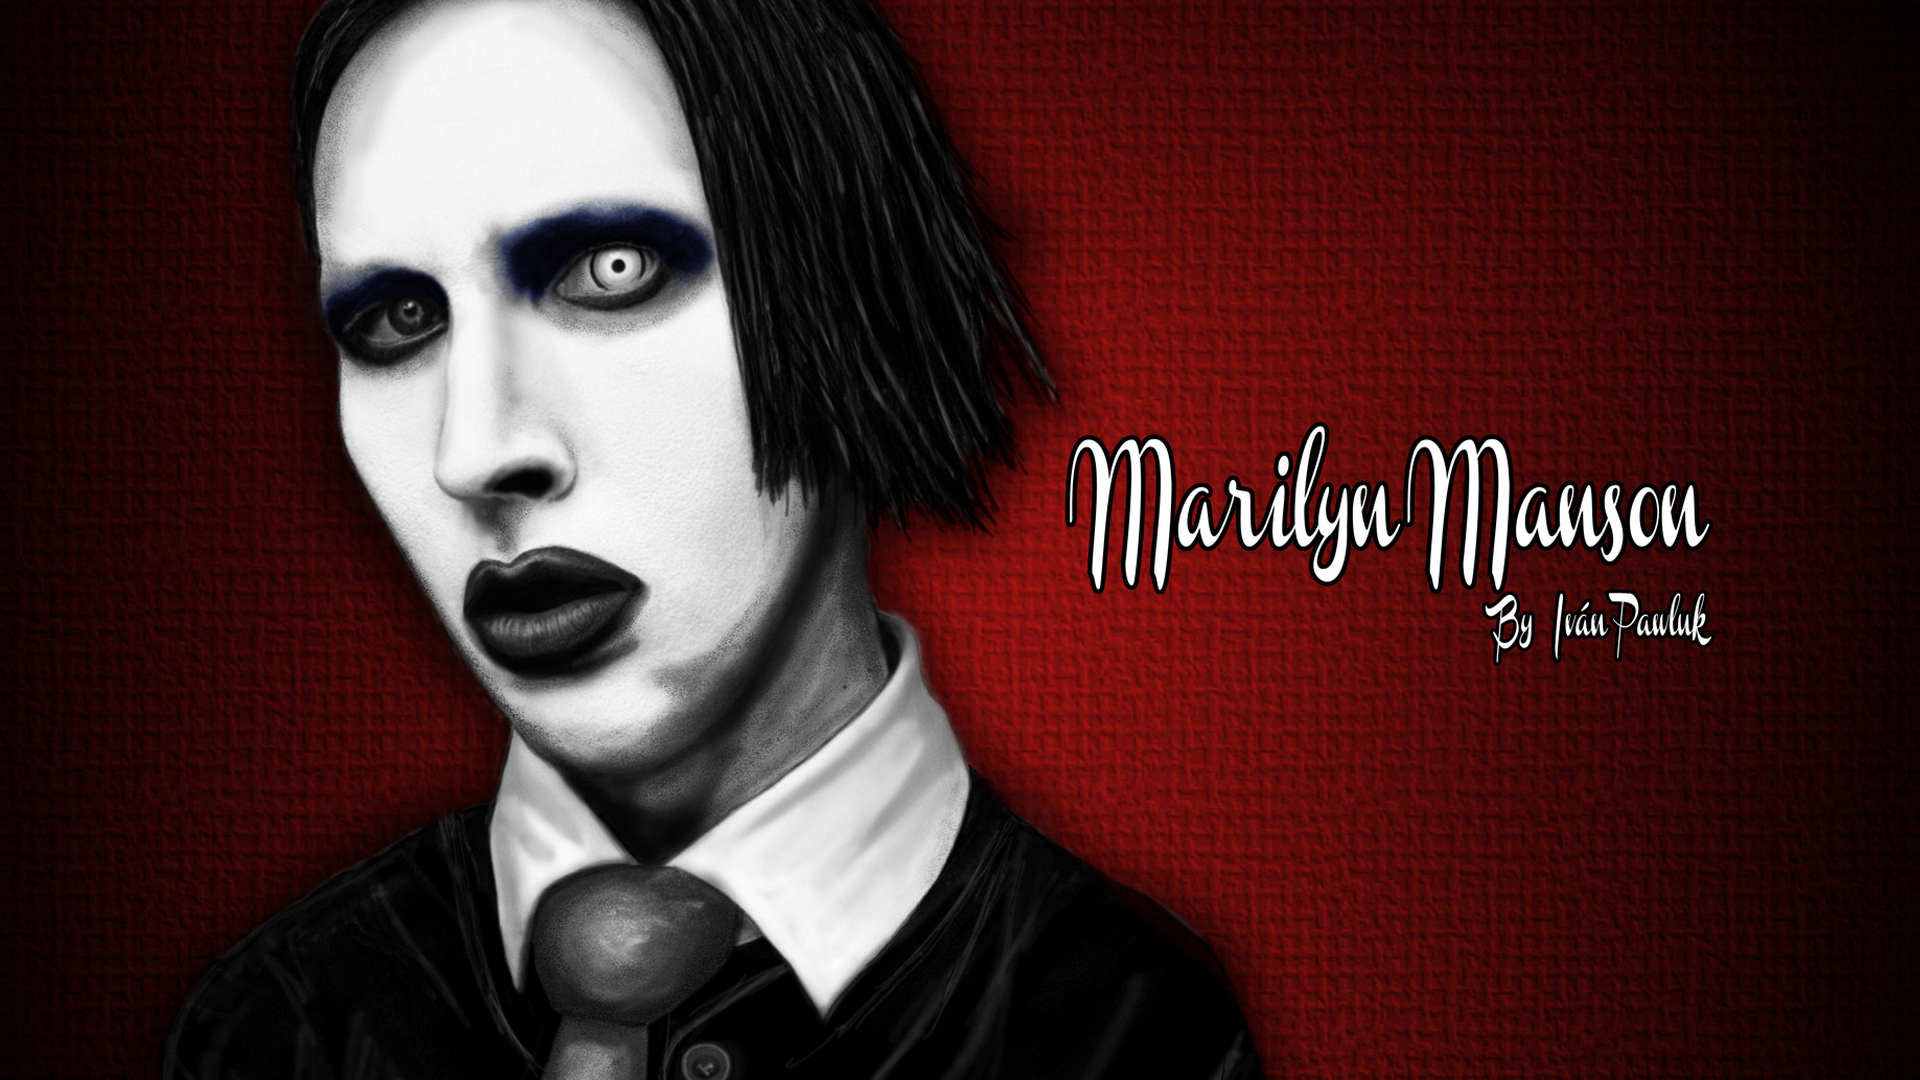 Marilyn Manson Wallpaper HD - WallpaperSafari